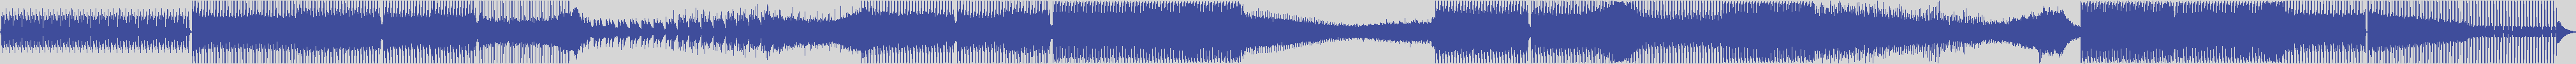 atomic_recordings [AR020] Alex Di Stefano - Ogma [Simone De Caro & Lollo Rmx] audio wave form